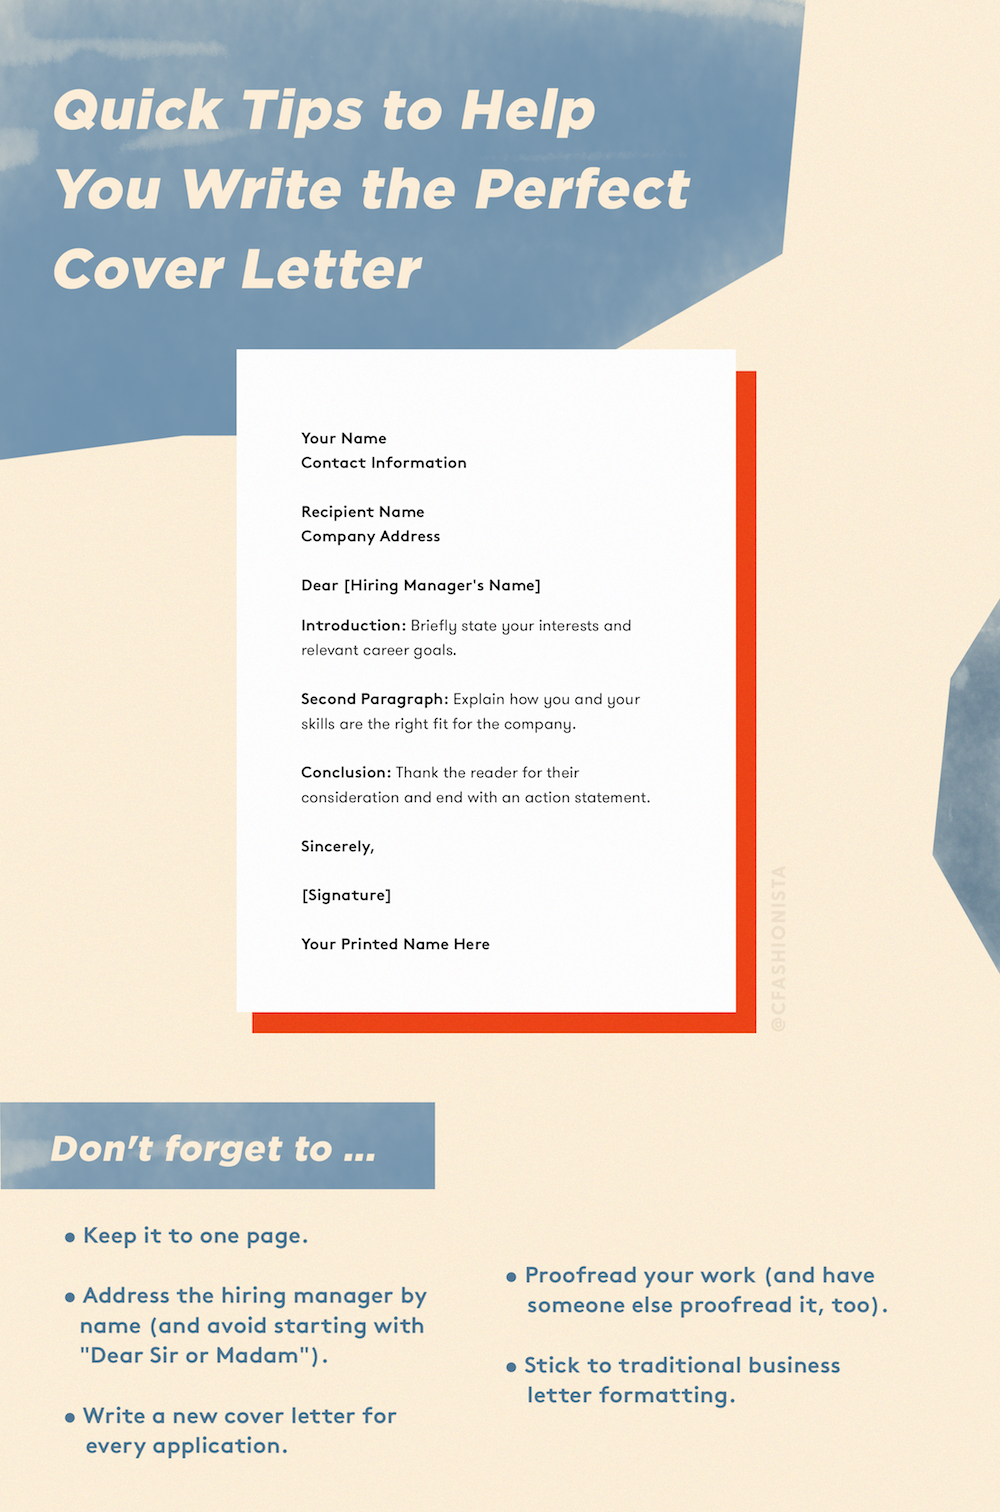 Cover Letter Tips